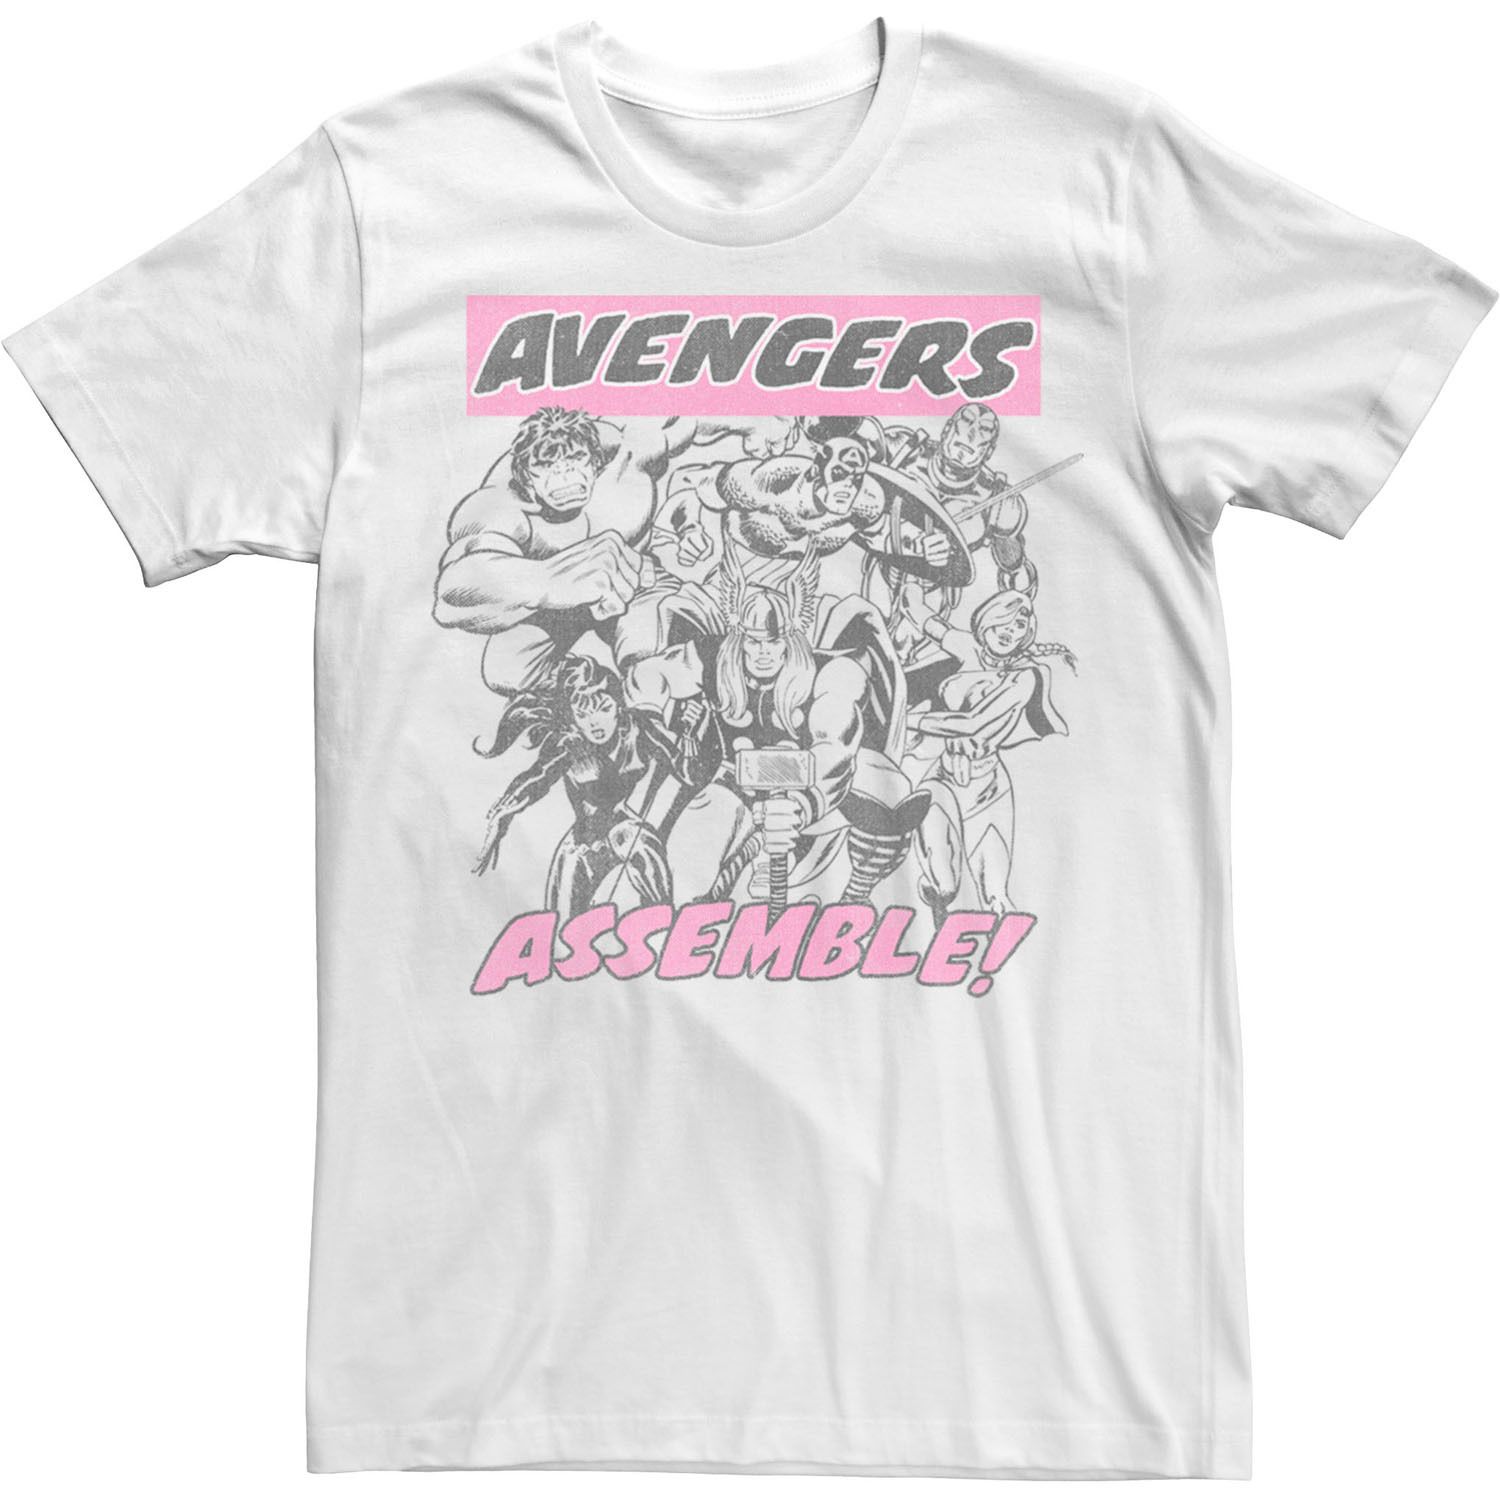 Мужская футболка Marvel Avengers Assemble Licensed Character